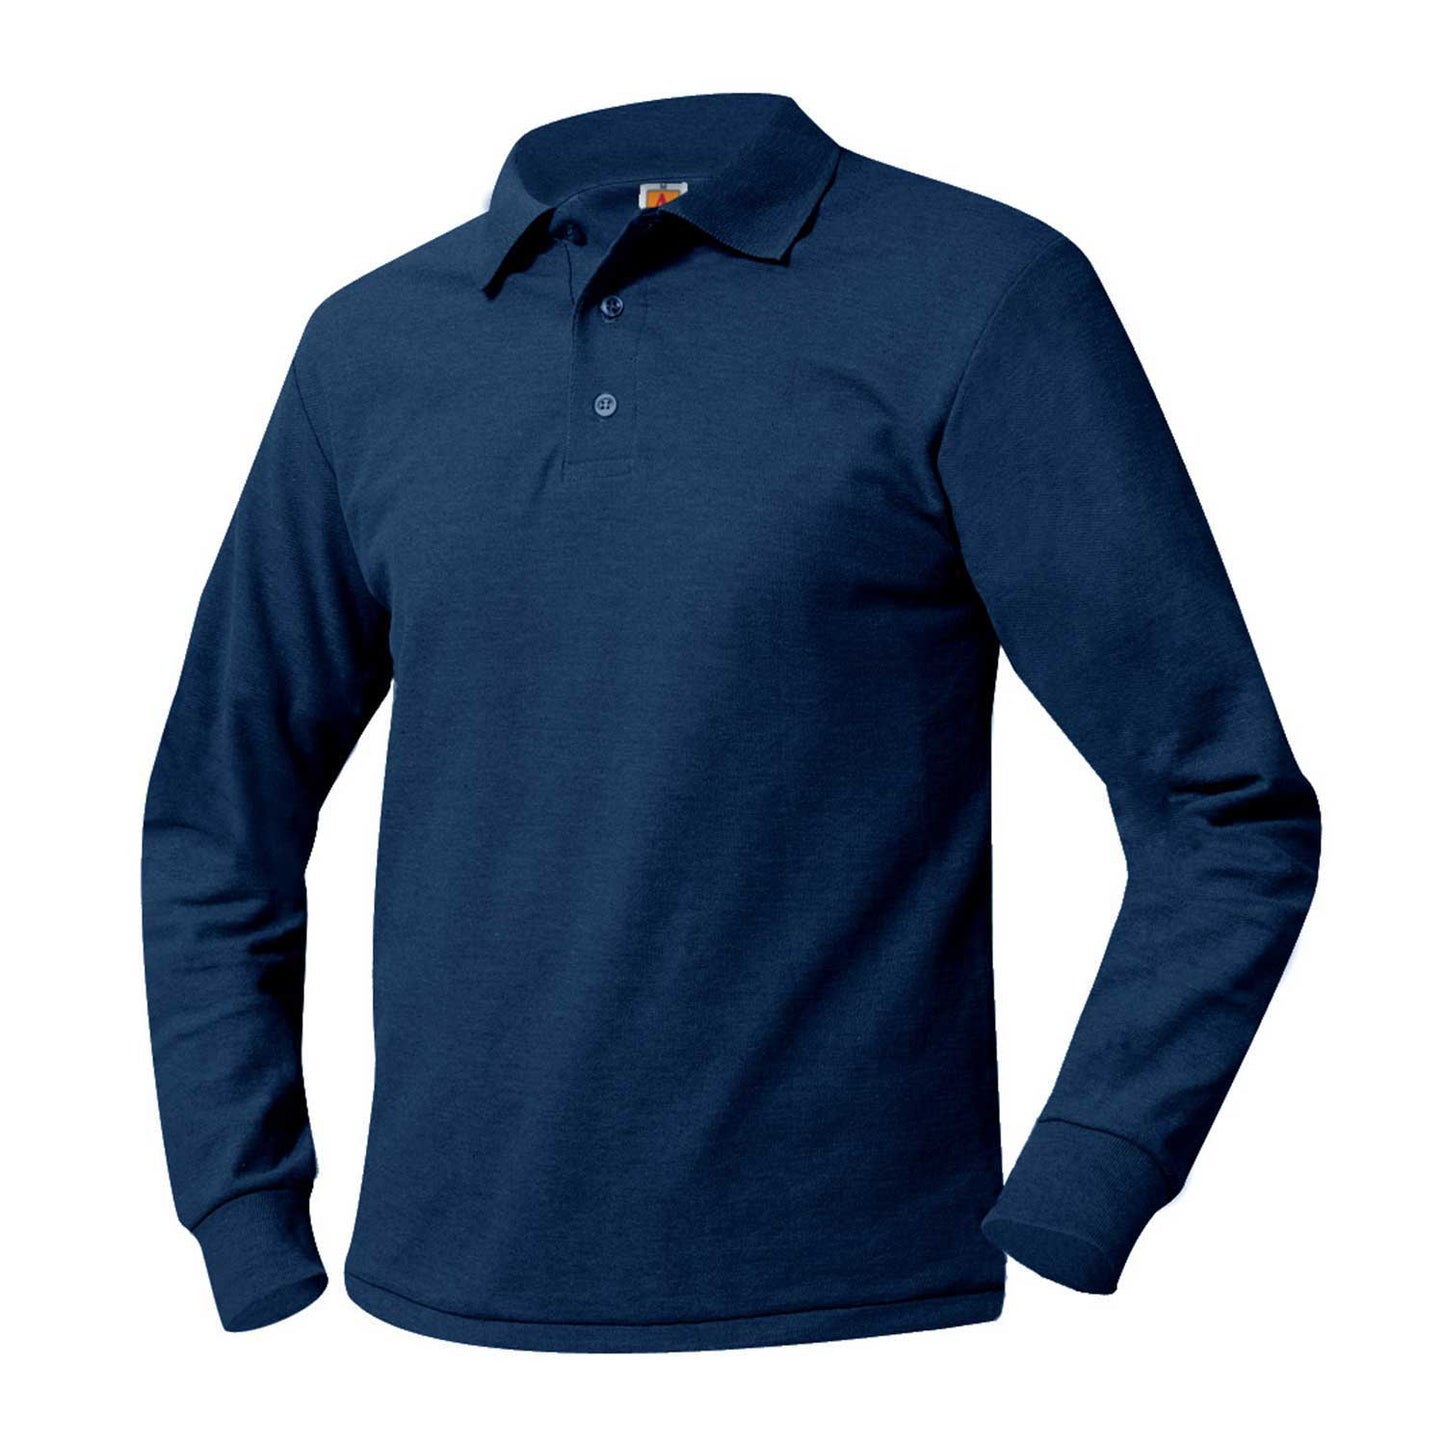 Unisex Pique Polo Shirt, Long Sleeves, Ribbed Cuffs w/Logo - 1101